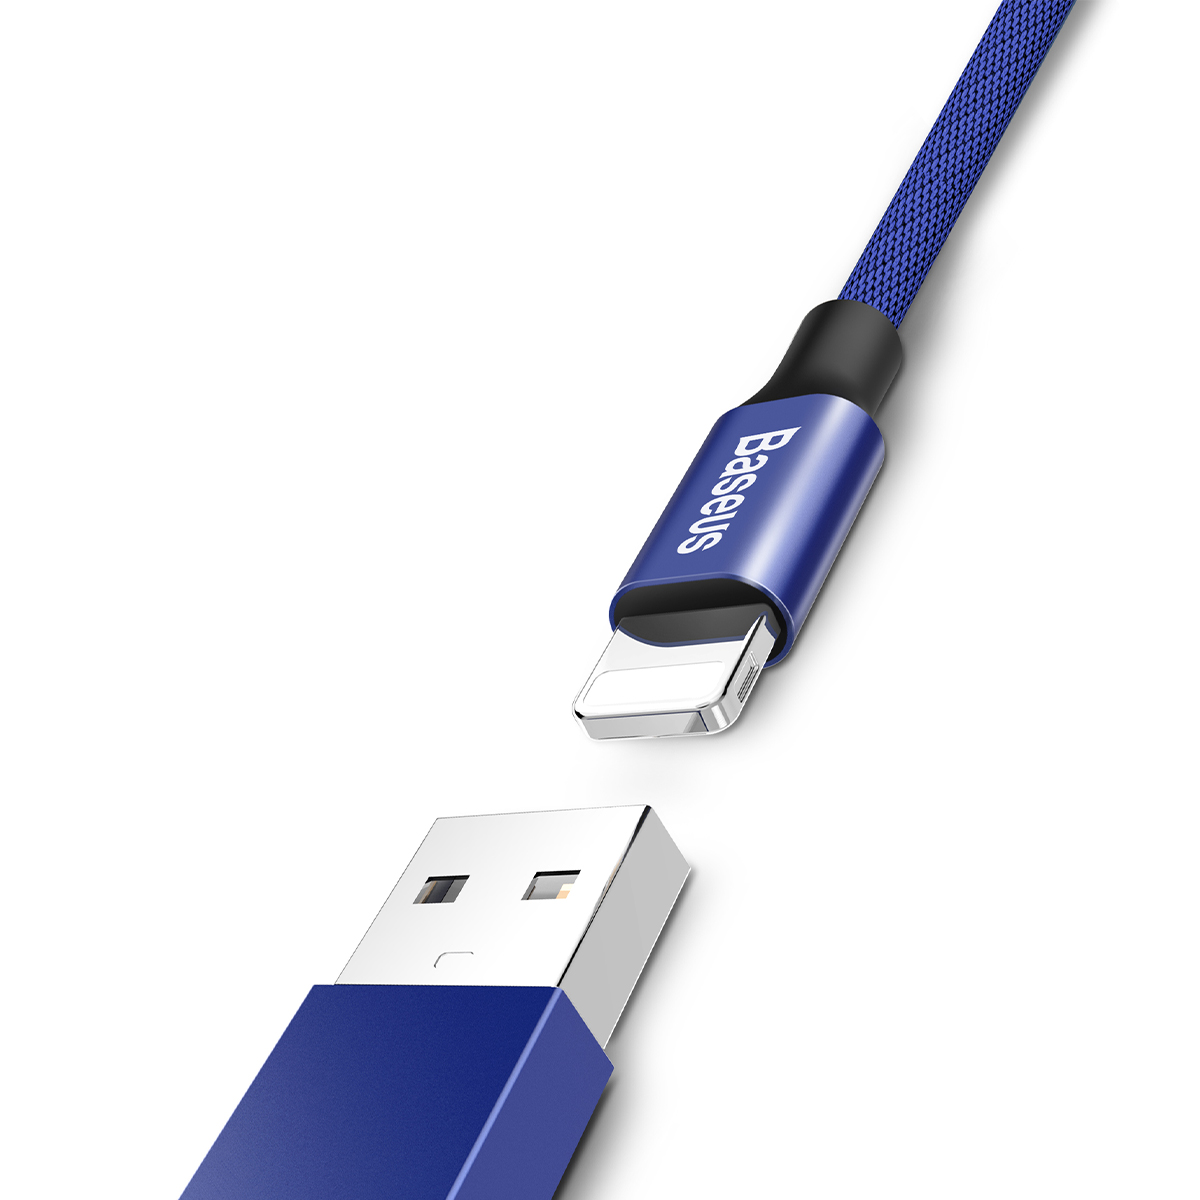 Baseus kabel Yiven (8-pin | 1,2 m) niebieski 2A / 4